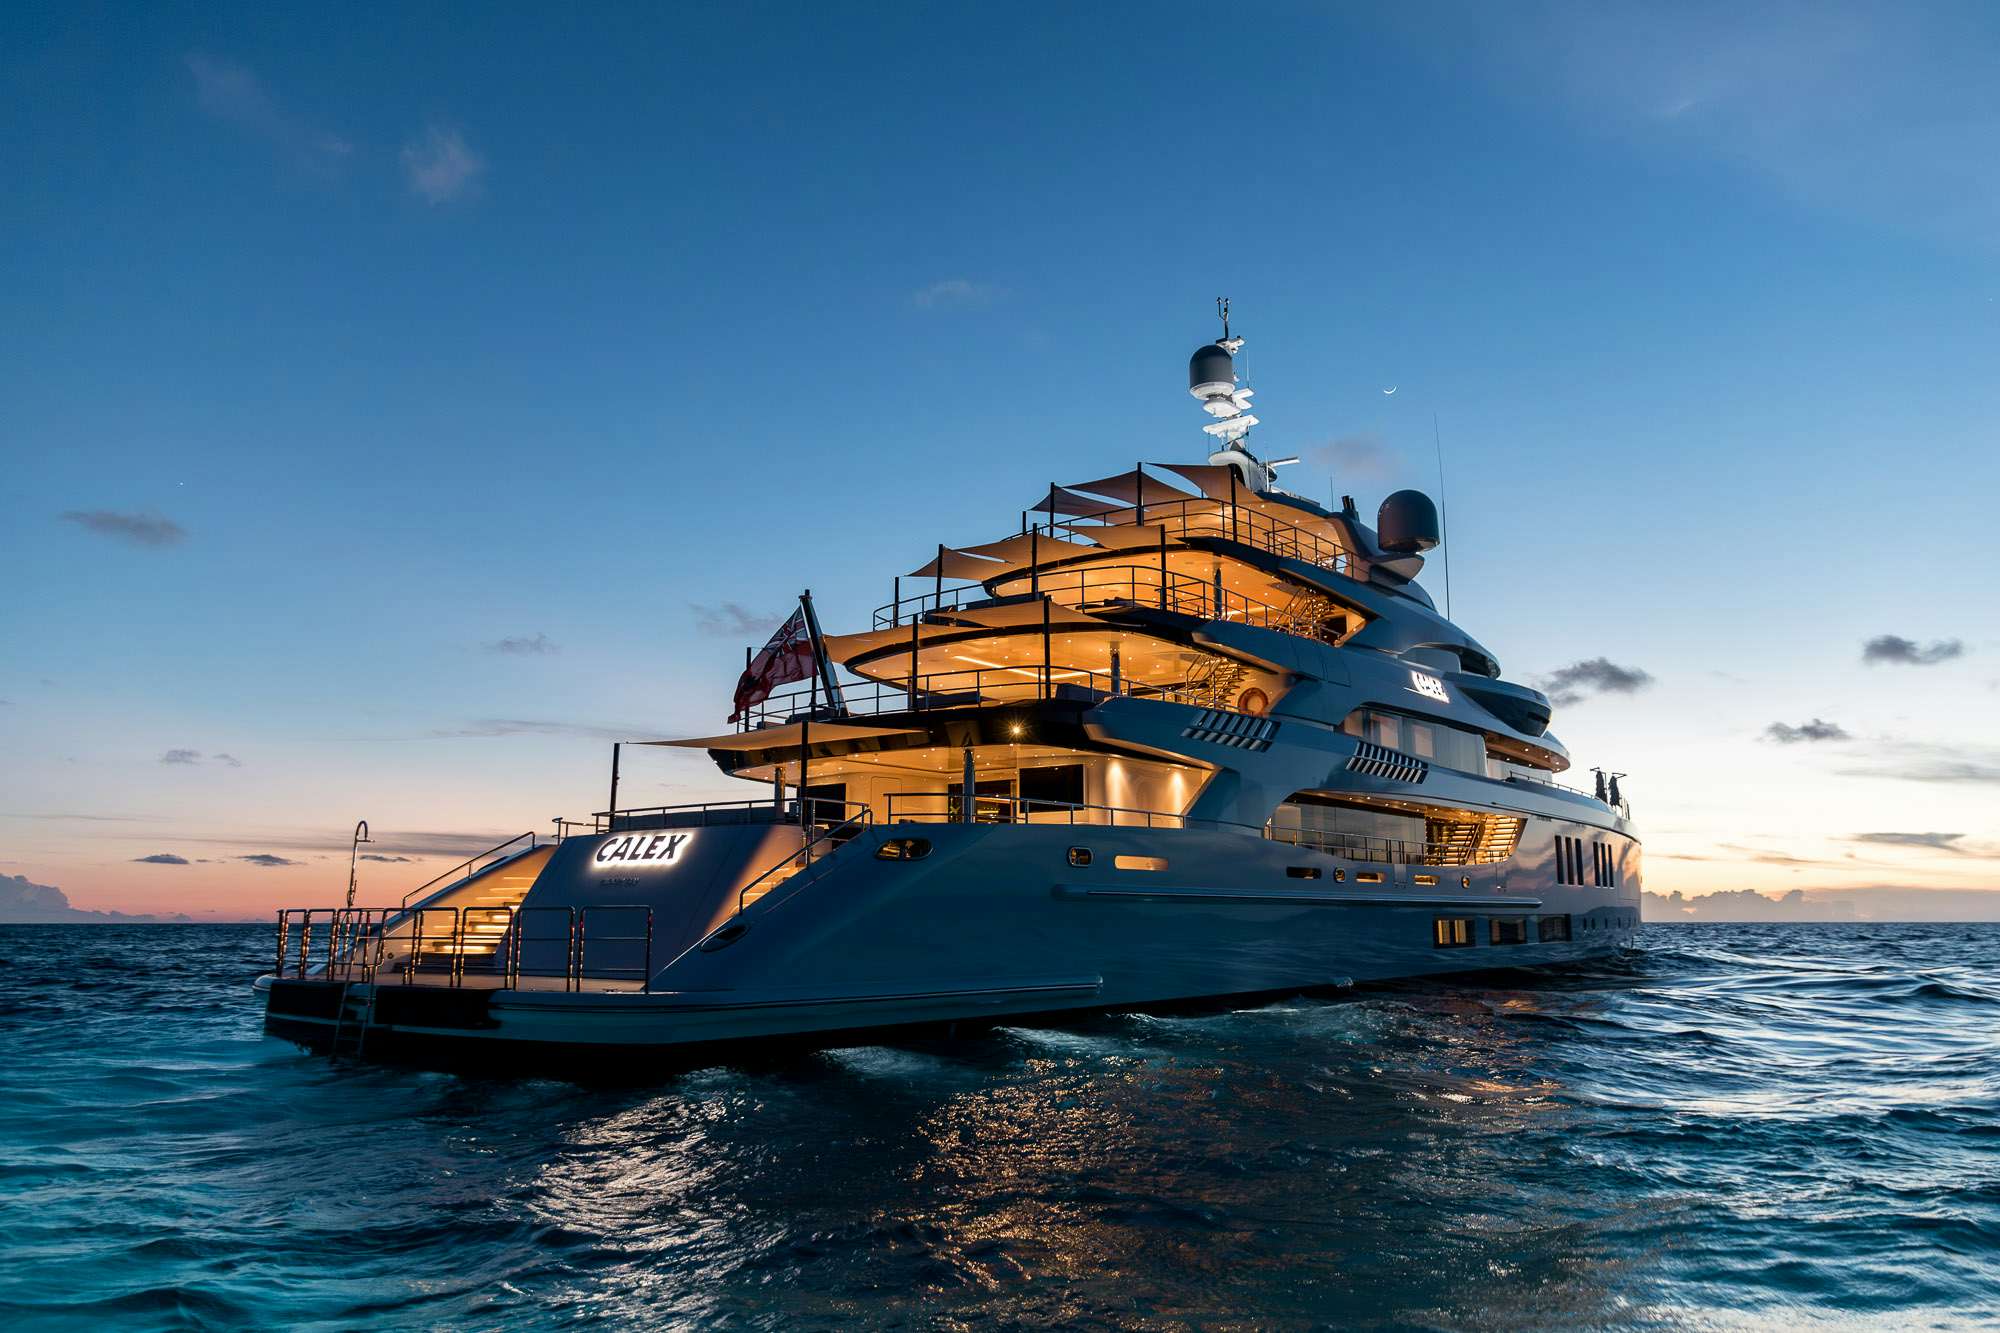 Calex, the Benetti 67meter that it's a true bespoke yacht